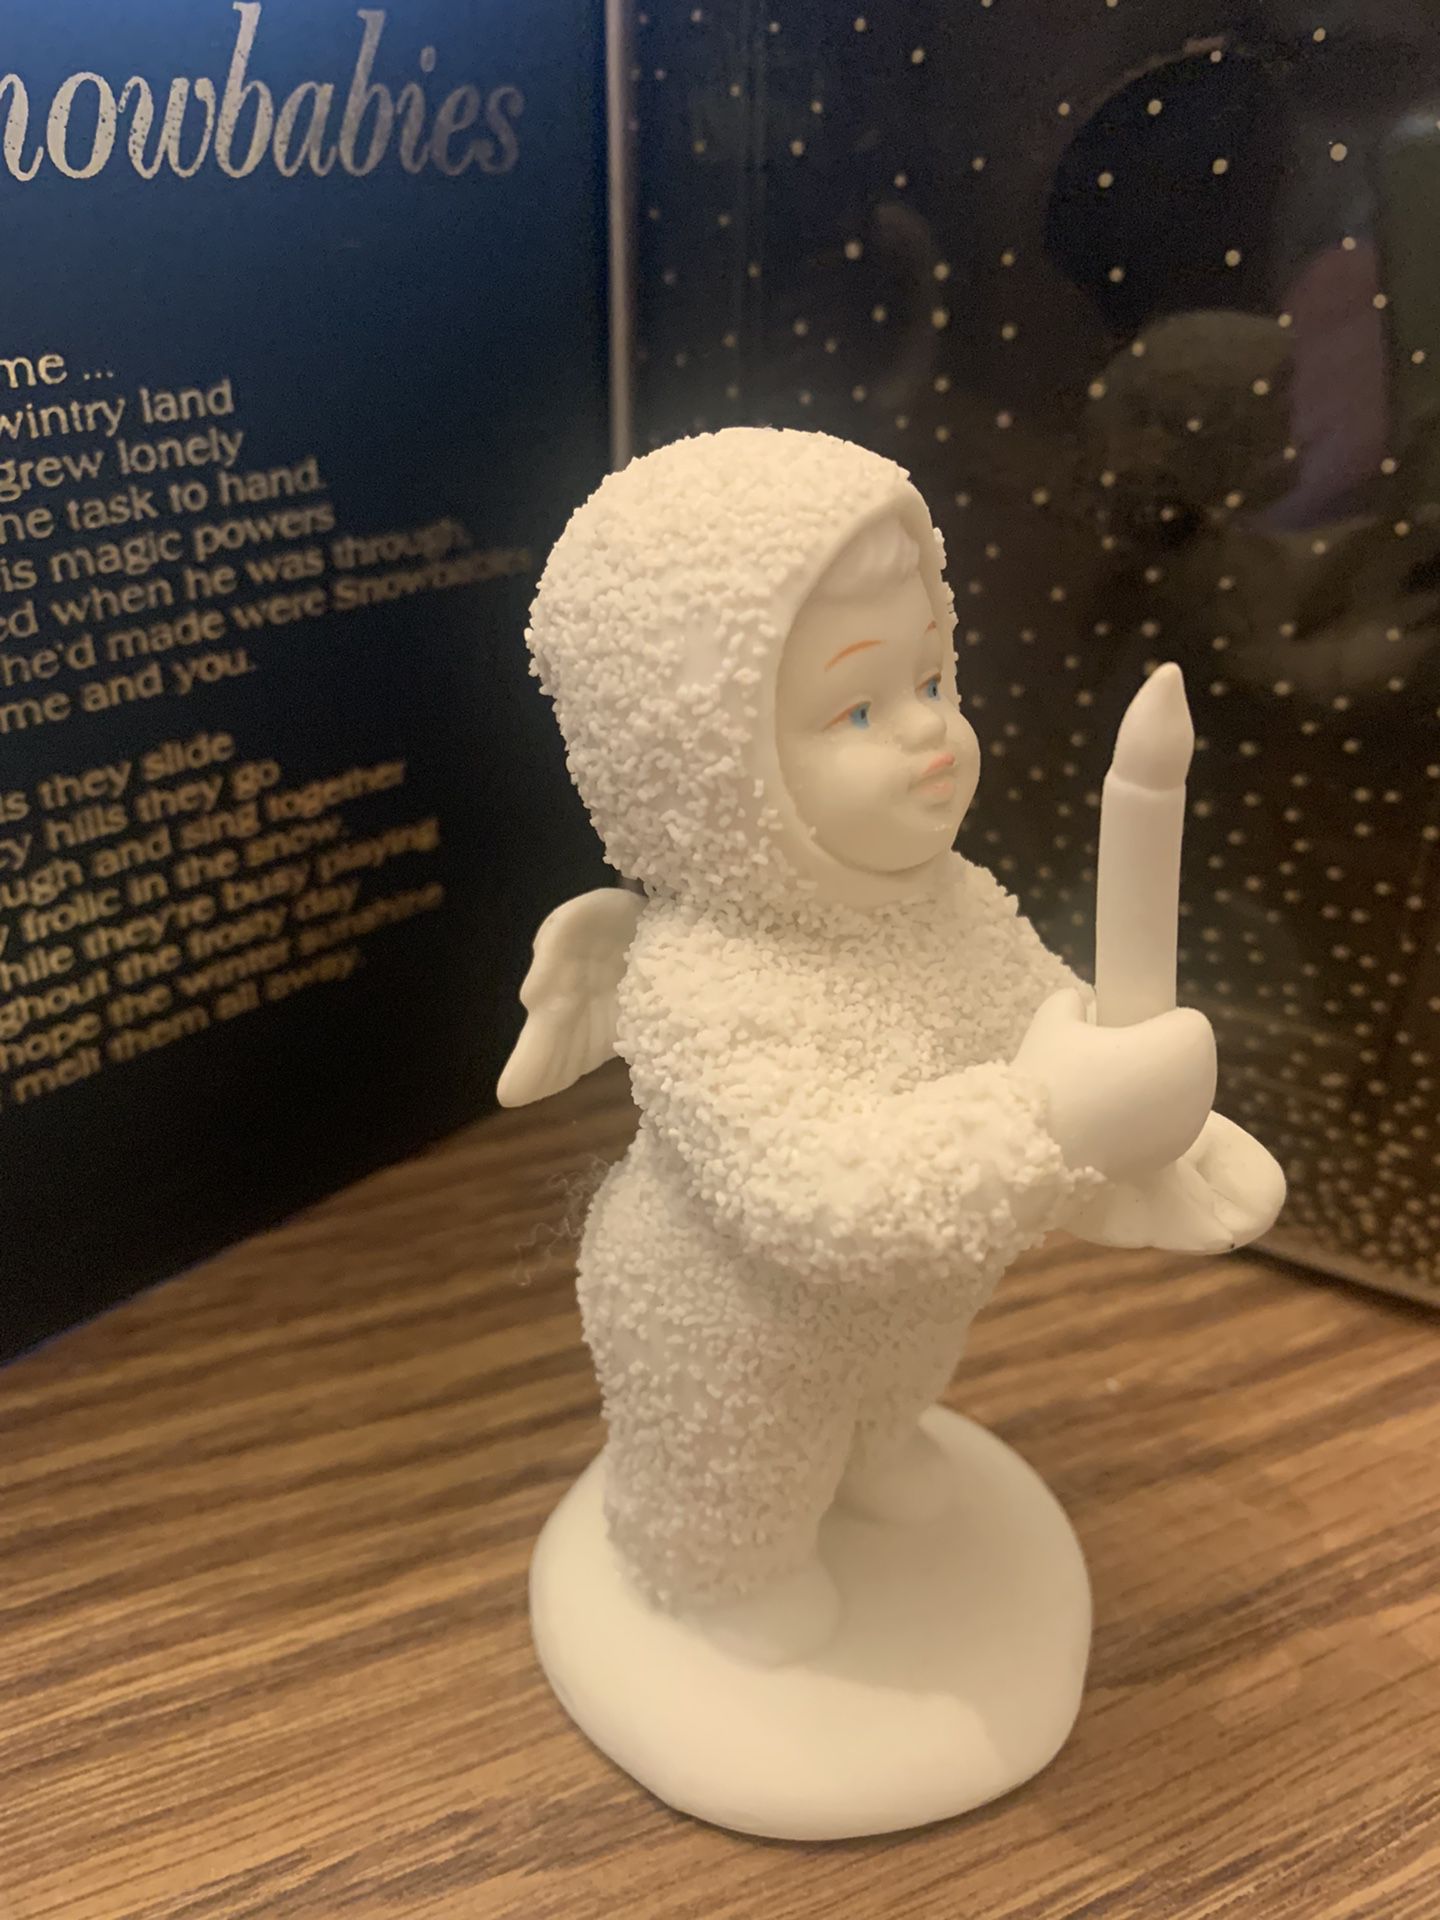 Snowbabies figurine